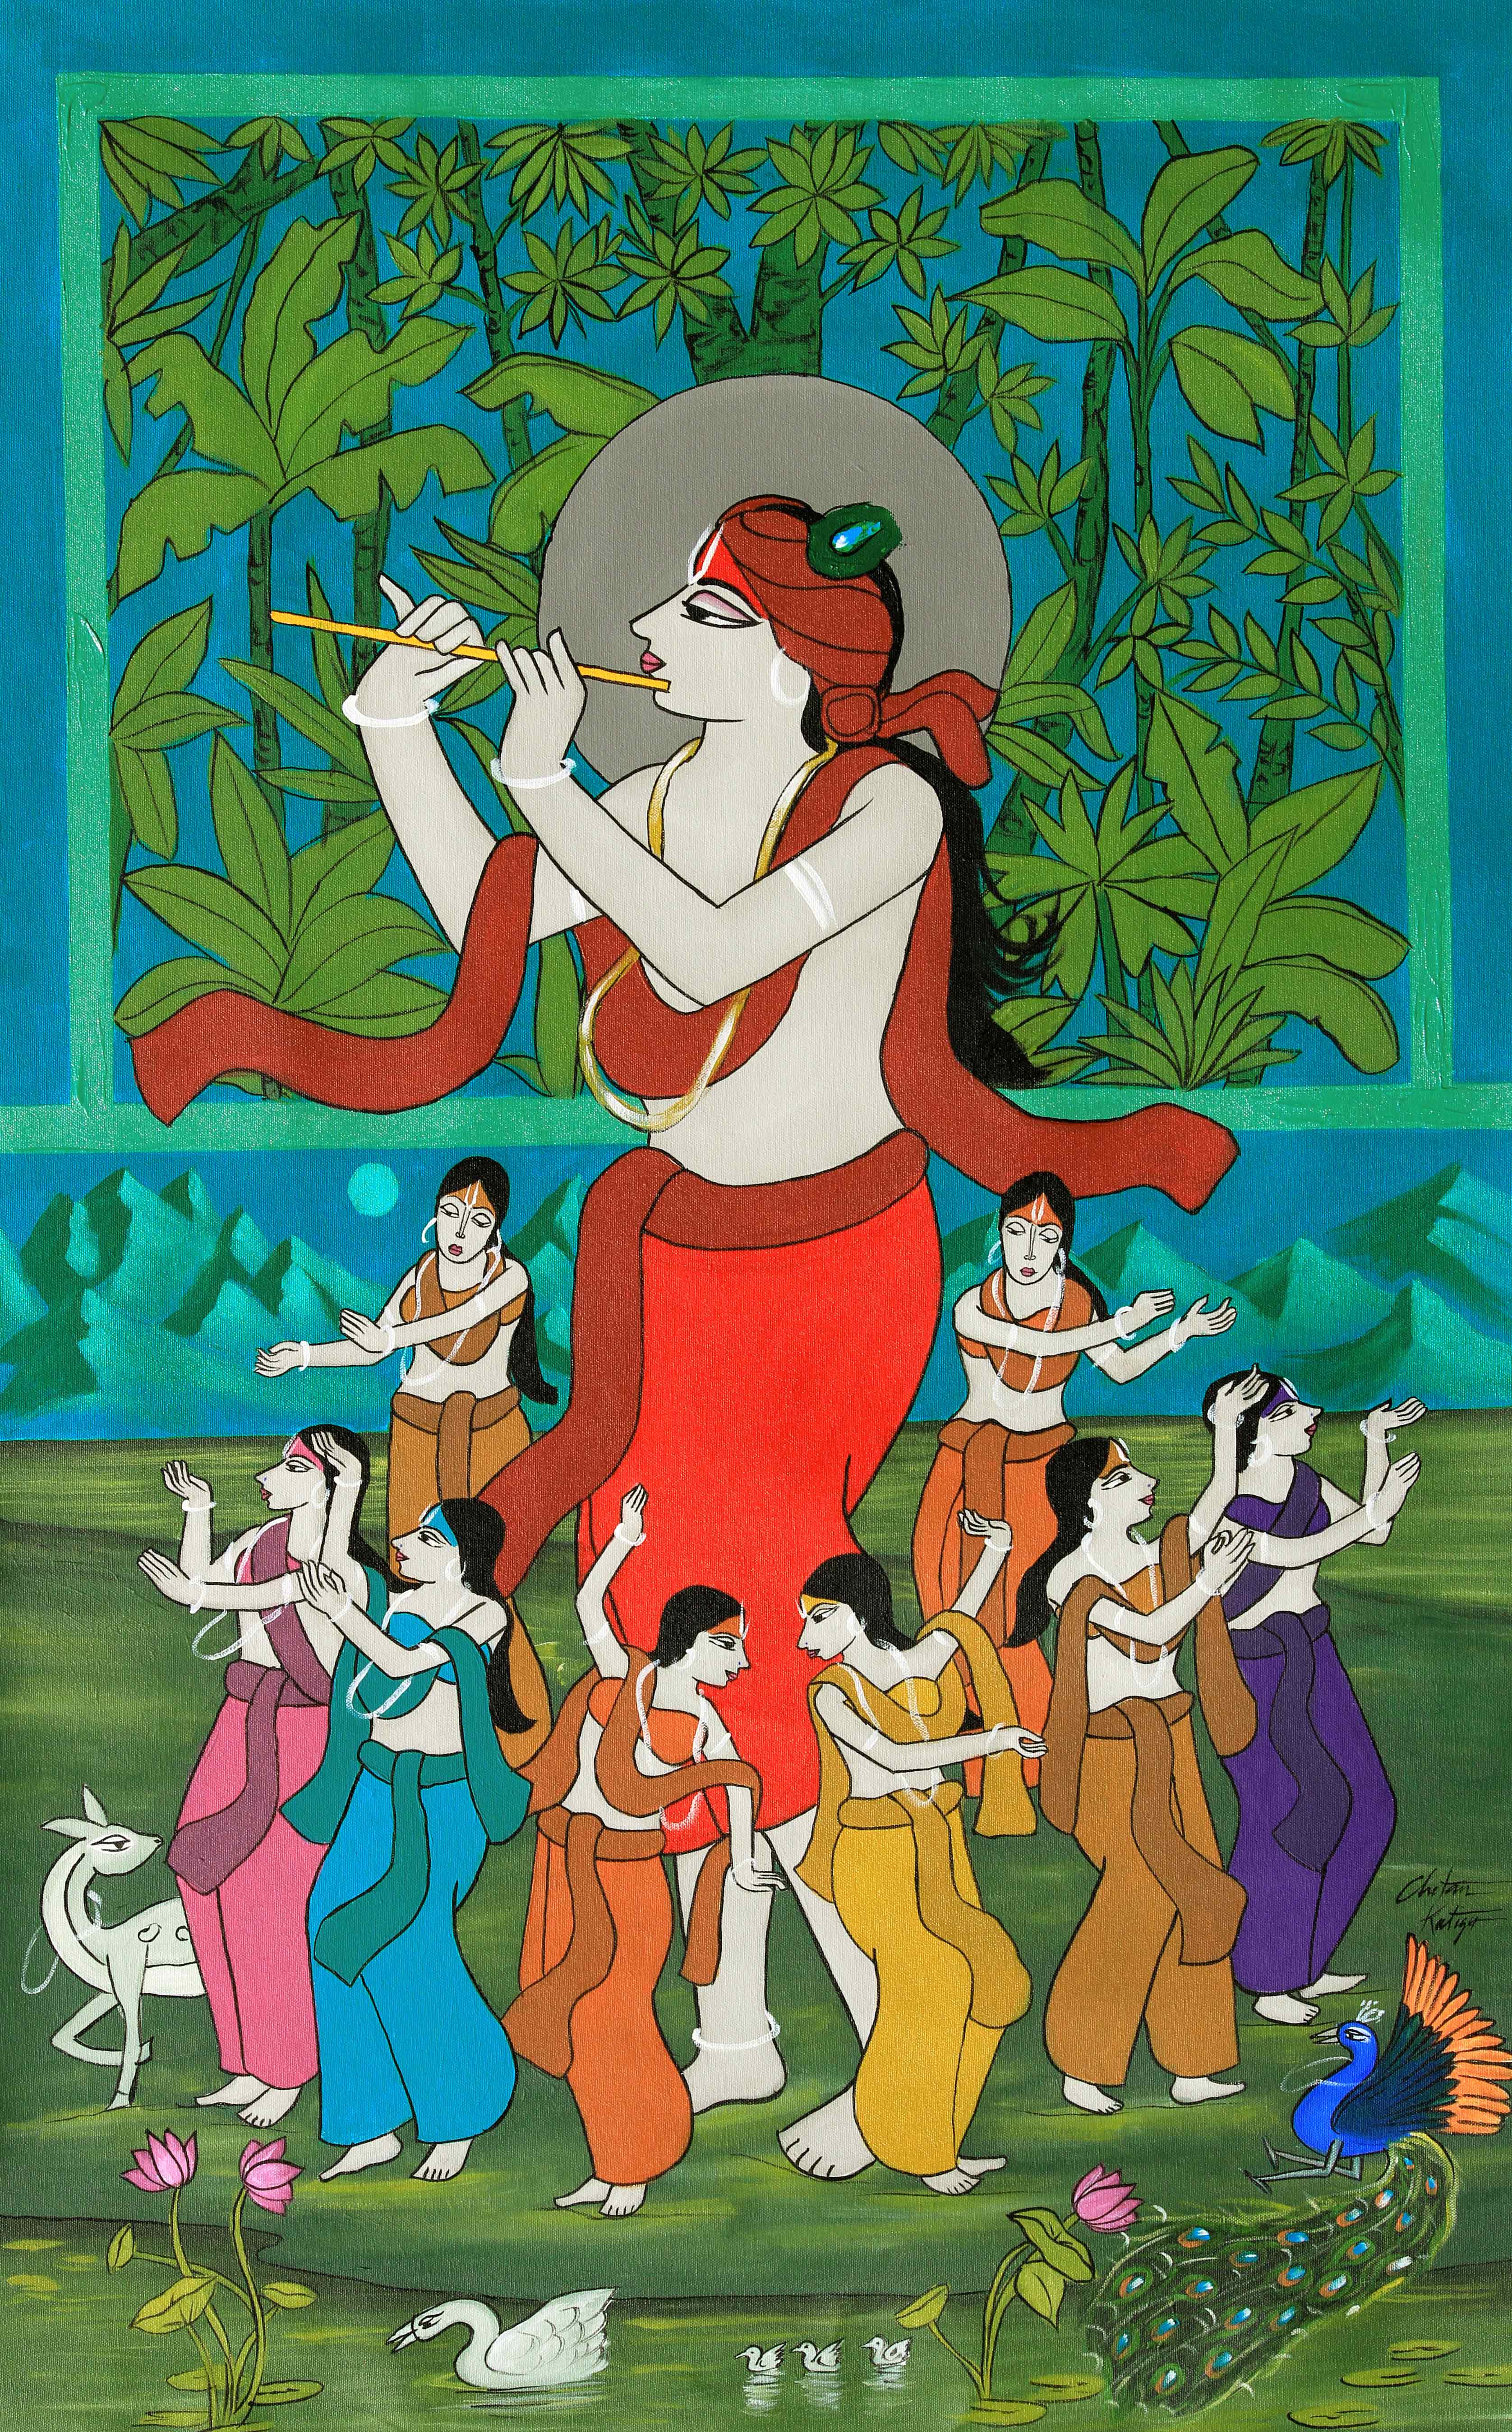 Krishna Raas Leela